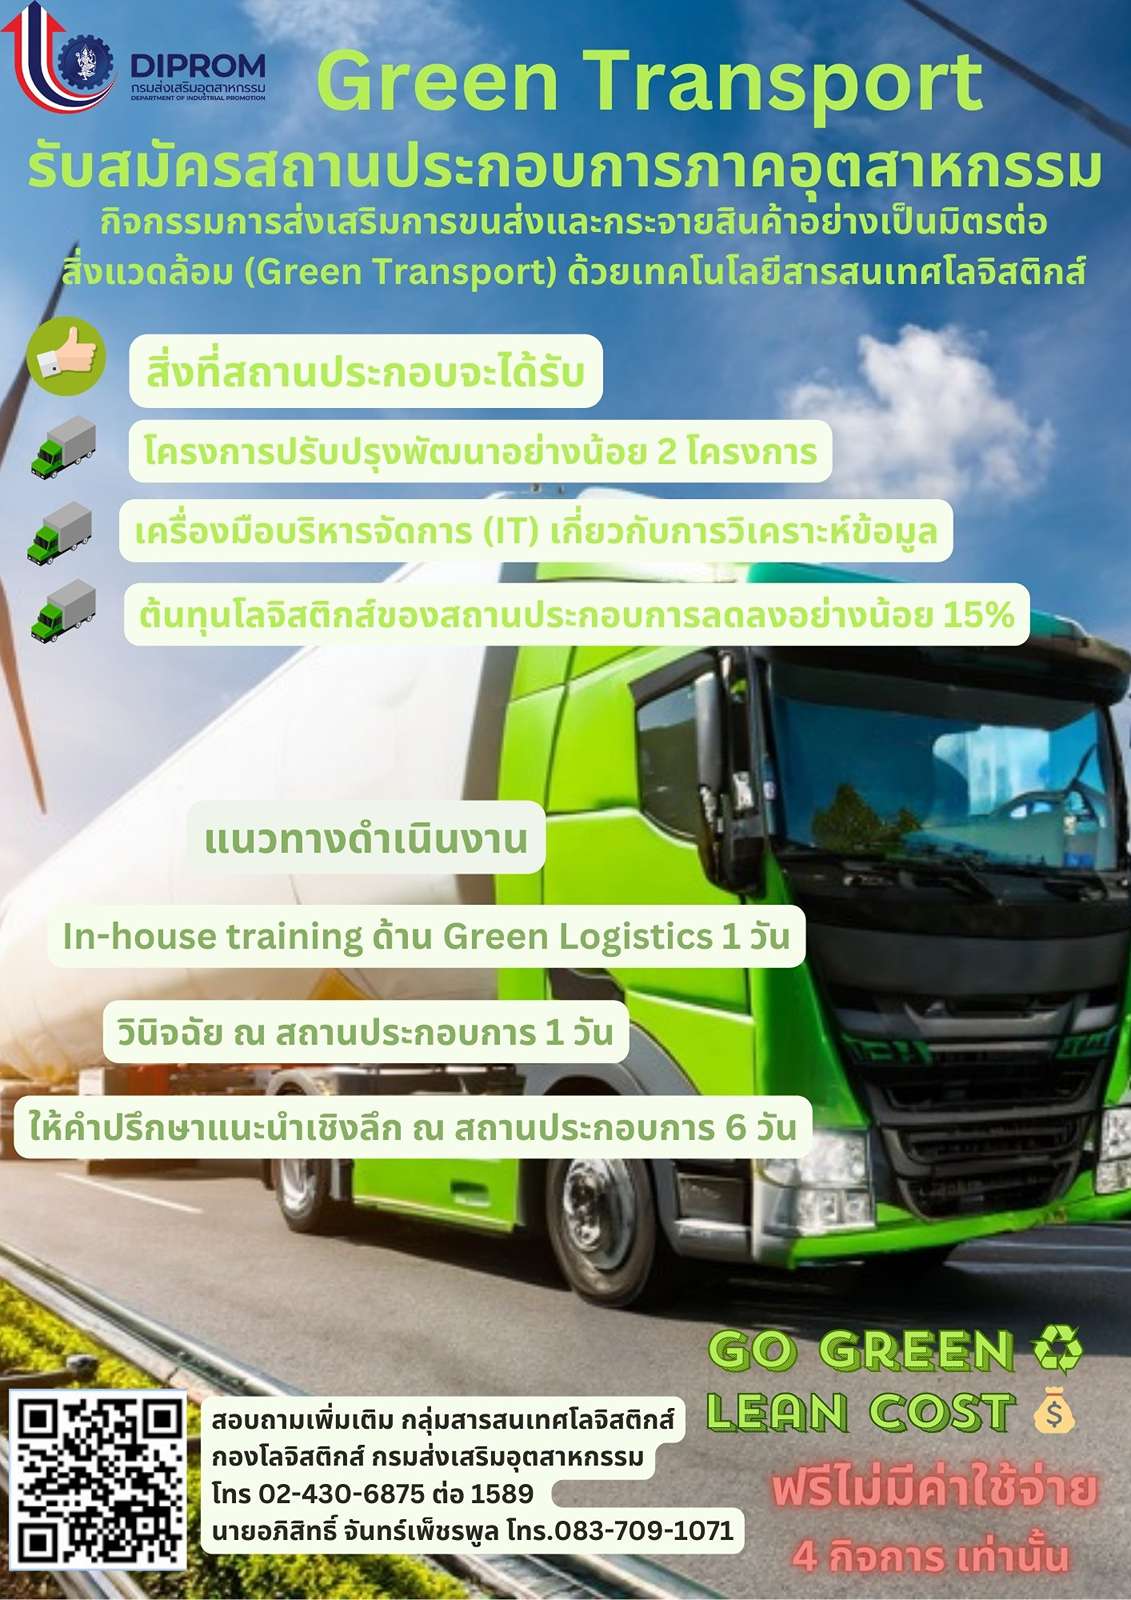 GO GREEN, LEAN COST, Green Transport ปีงบประมาณ 2567 